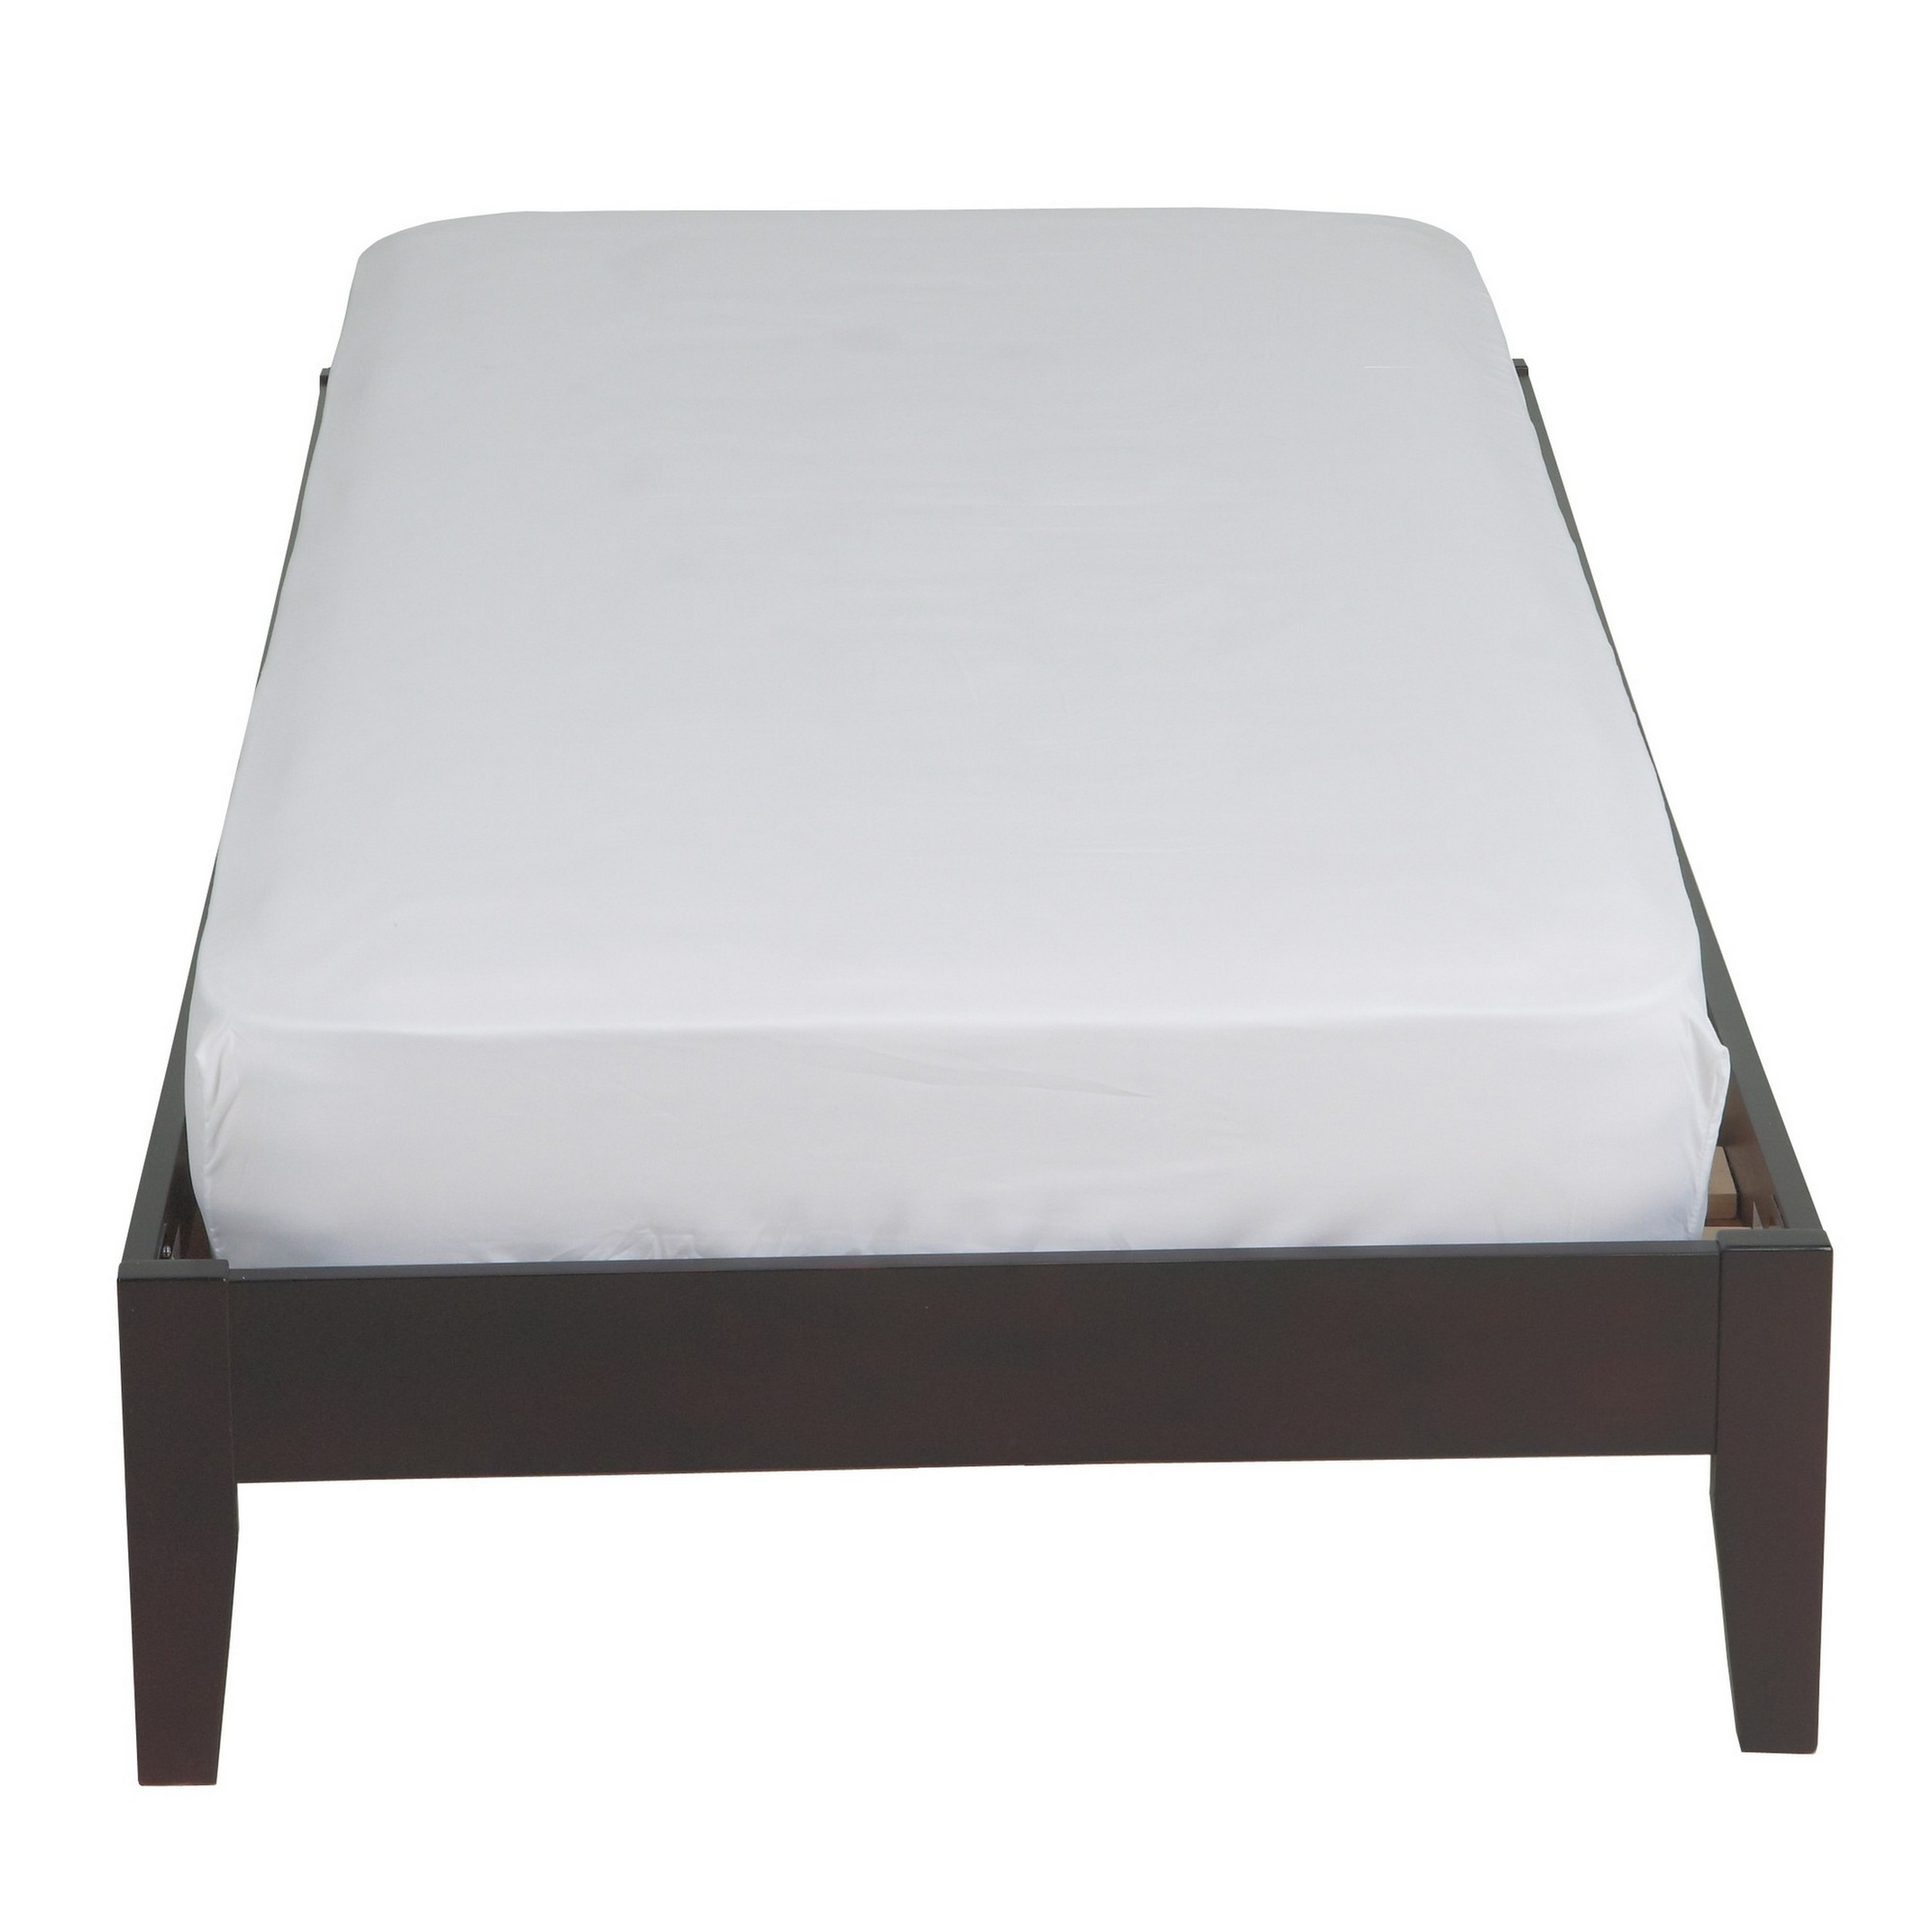 Evelyn Low Profile King Size Platform Bed, Slats, Rich Espresso Brown Wood- Saltoro Sherpi